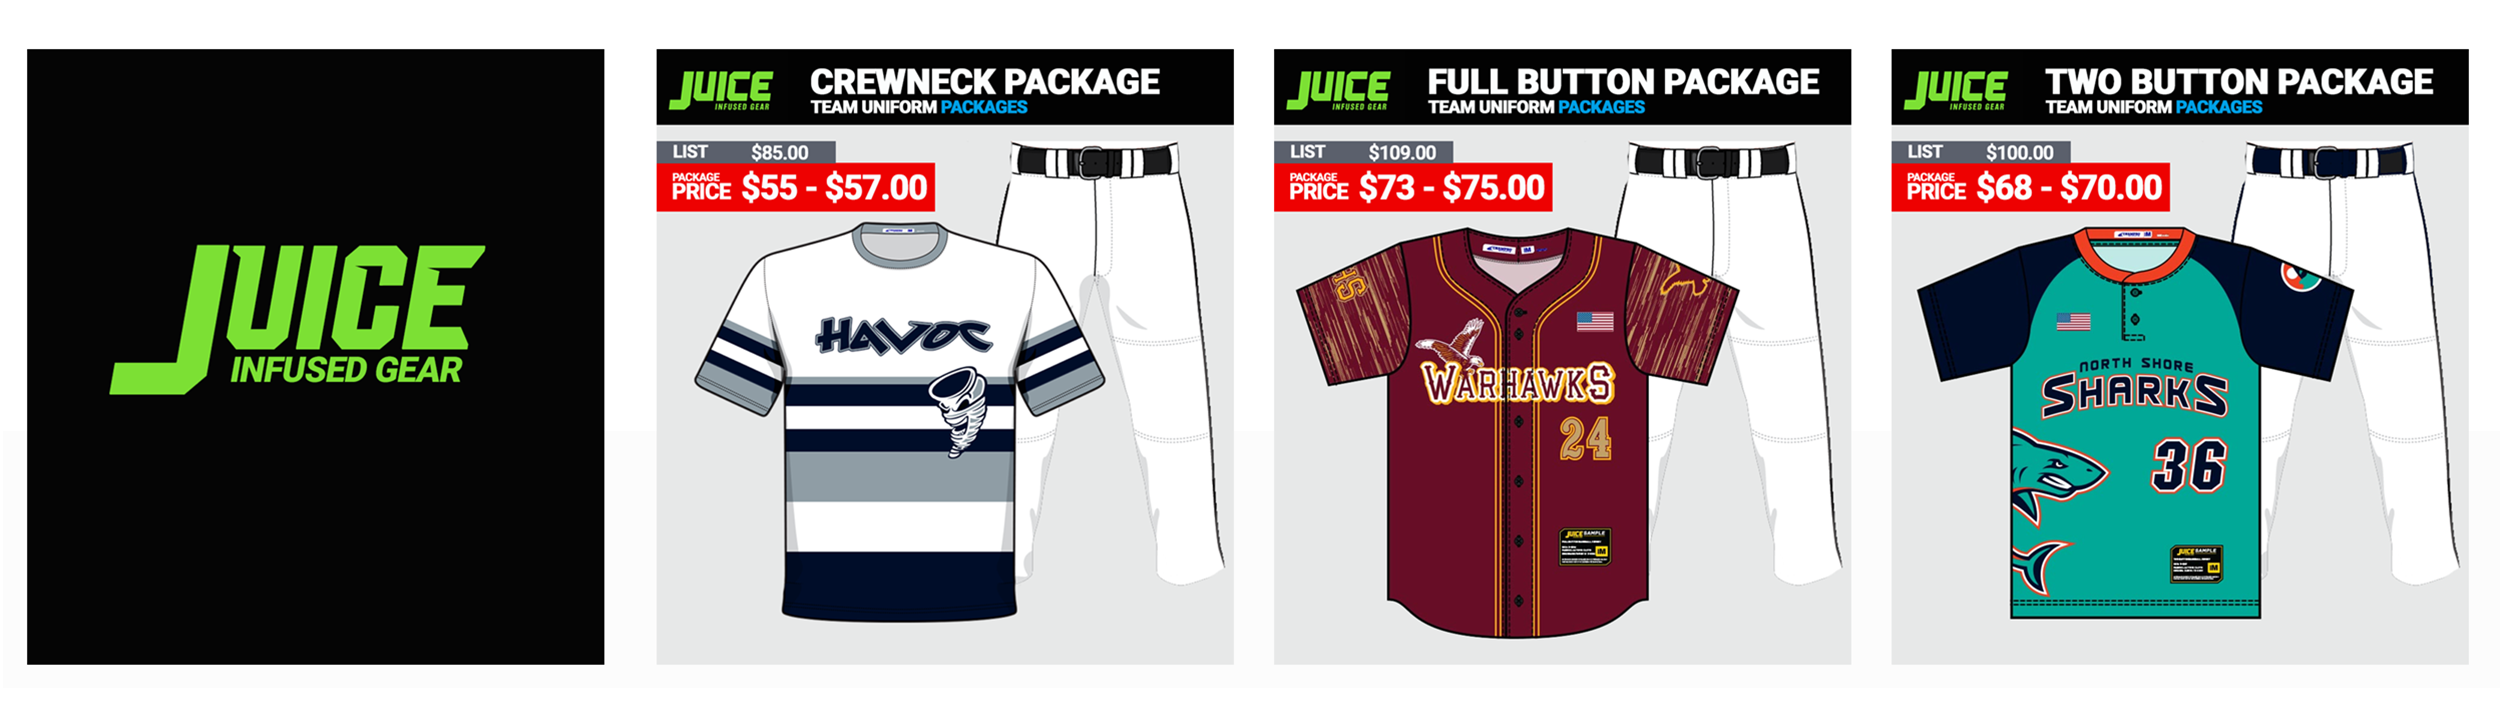 Showcase Baseball Academy Baseball Uniforms JBR Package